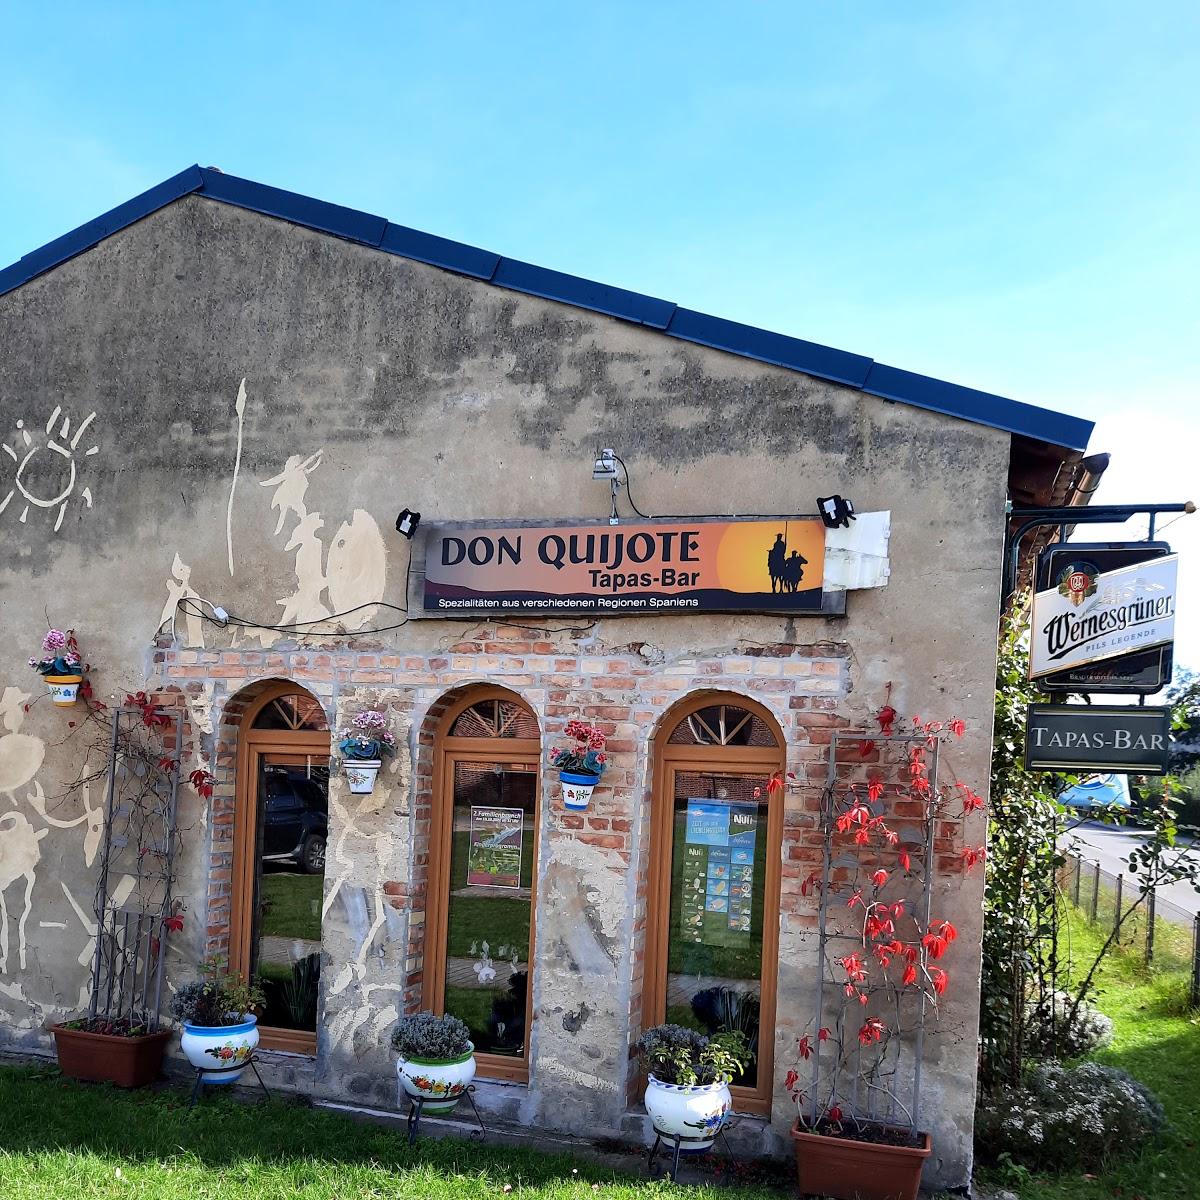 Restaurant "La Finca de Don Quijote" in Wandlitz